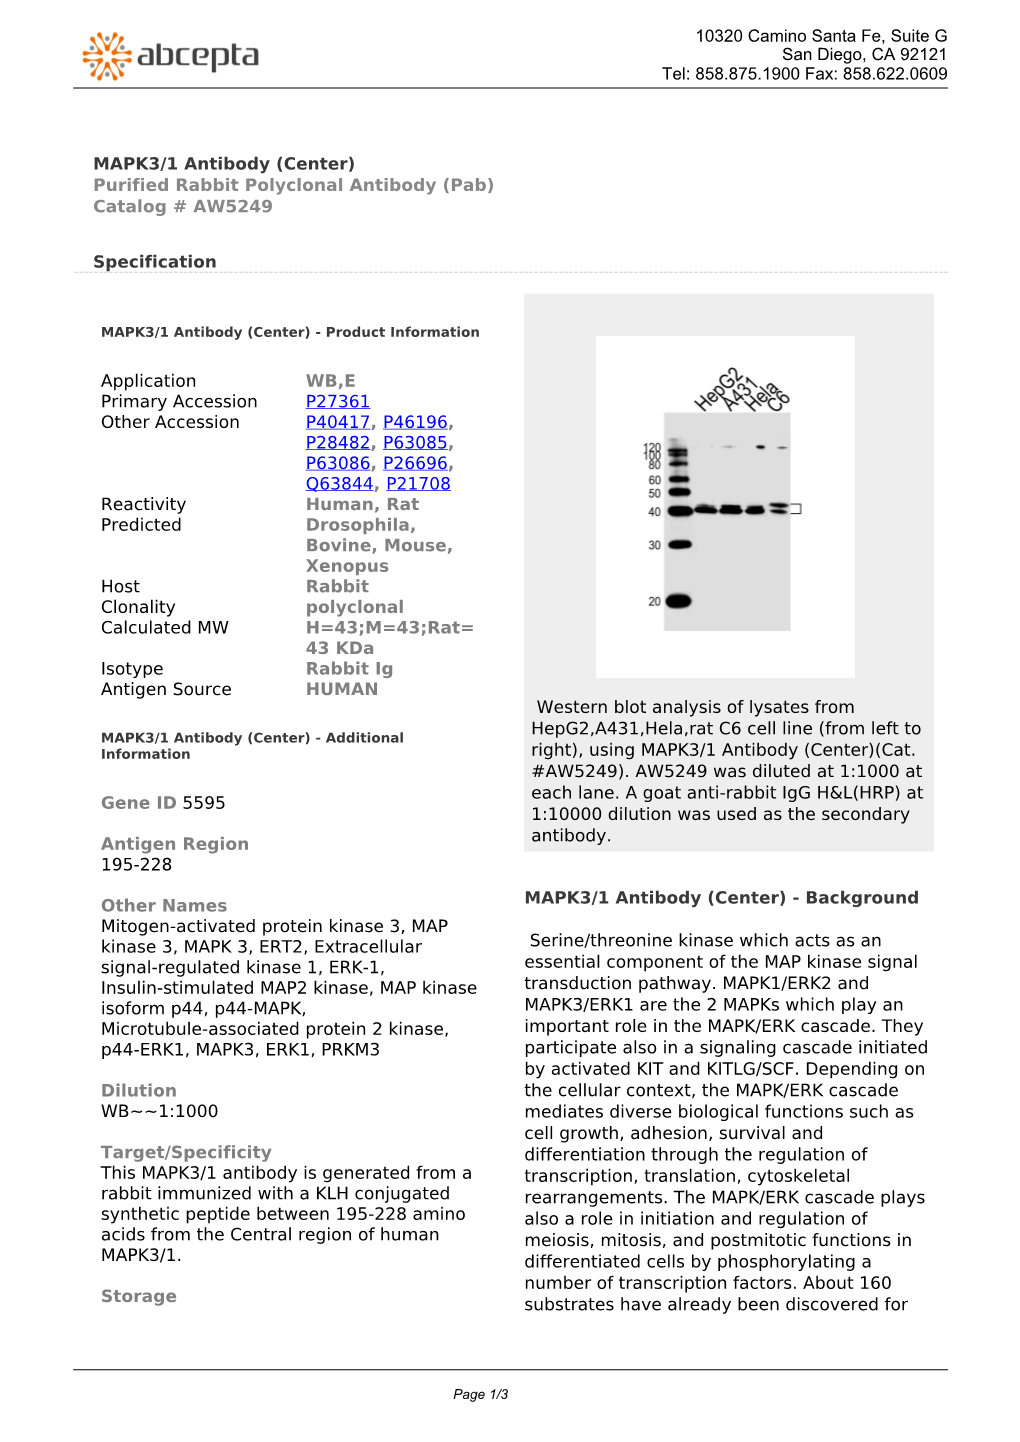 MAPK3/1 Antibody (Center) Purified Rabbit Polyclonal Antibody (Pab) Catalog # AW5249